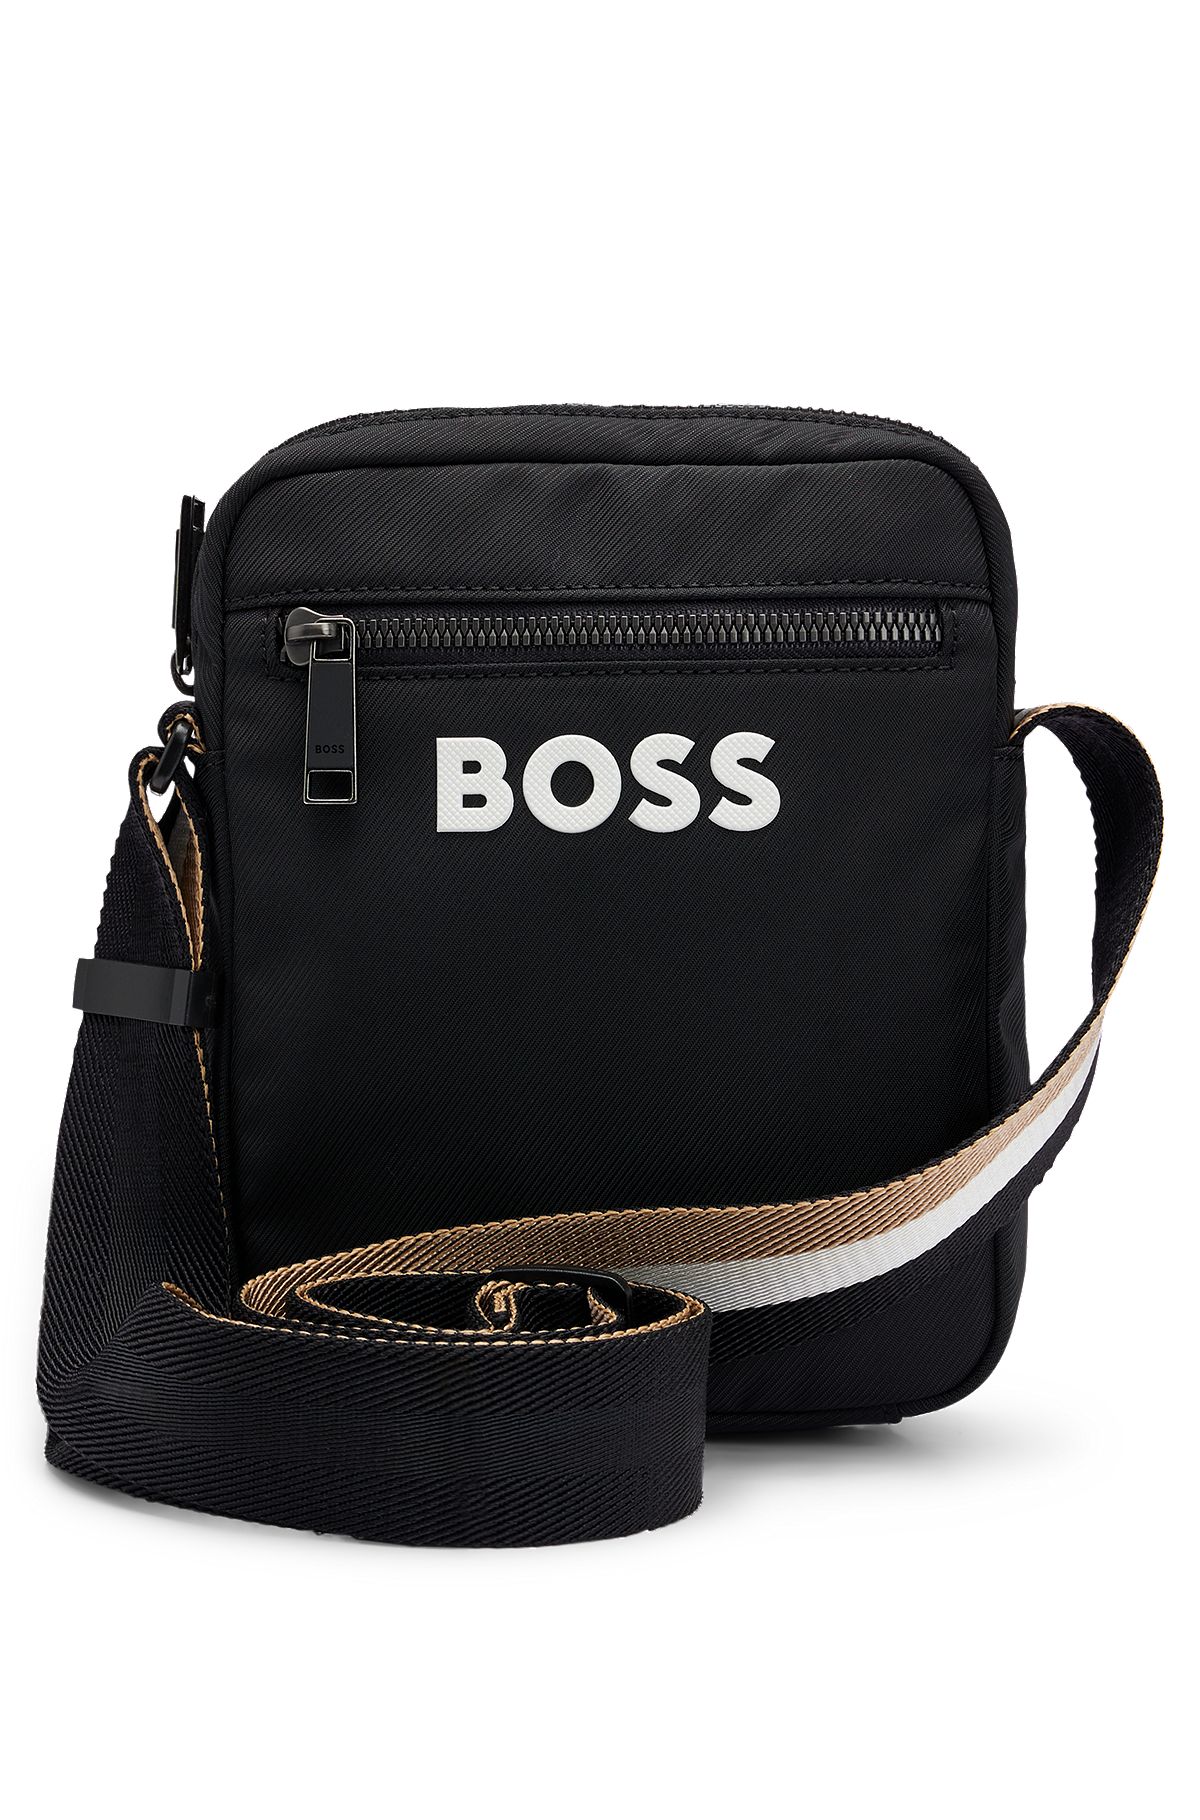 Contrast-logo cross-body bag with signature-stripe strap, Black